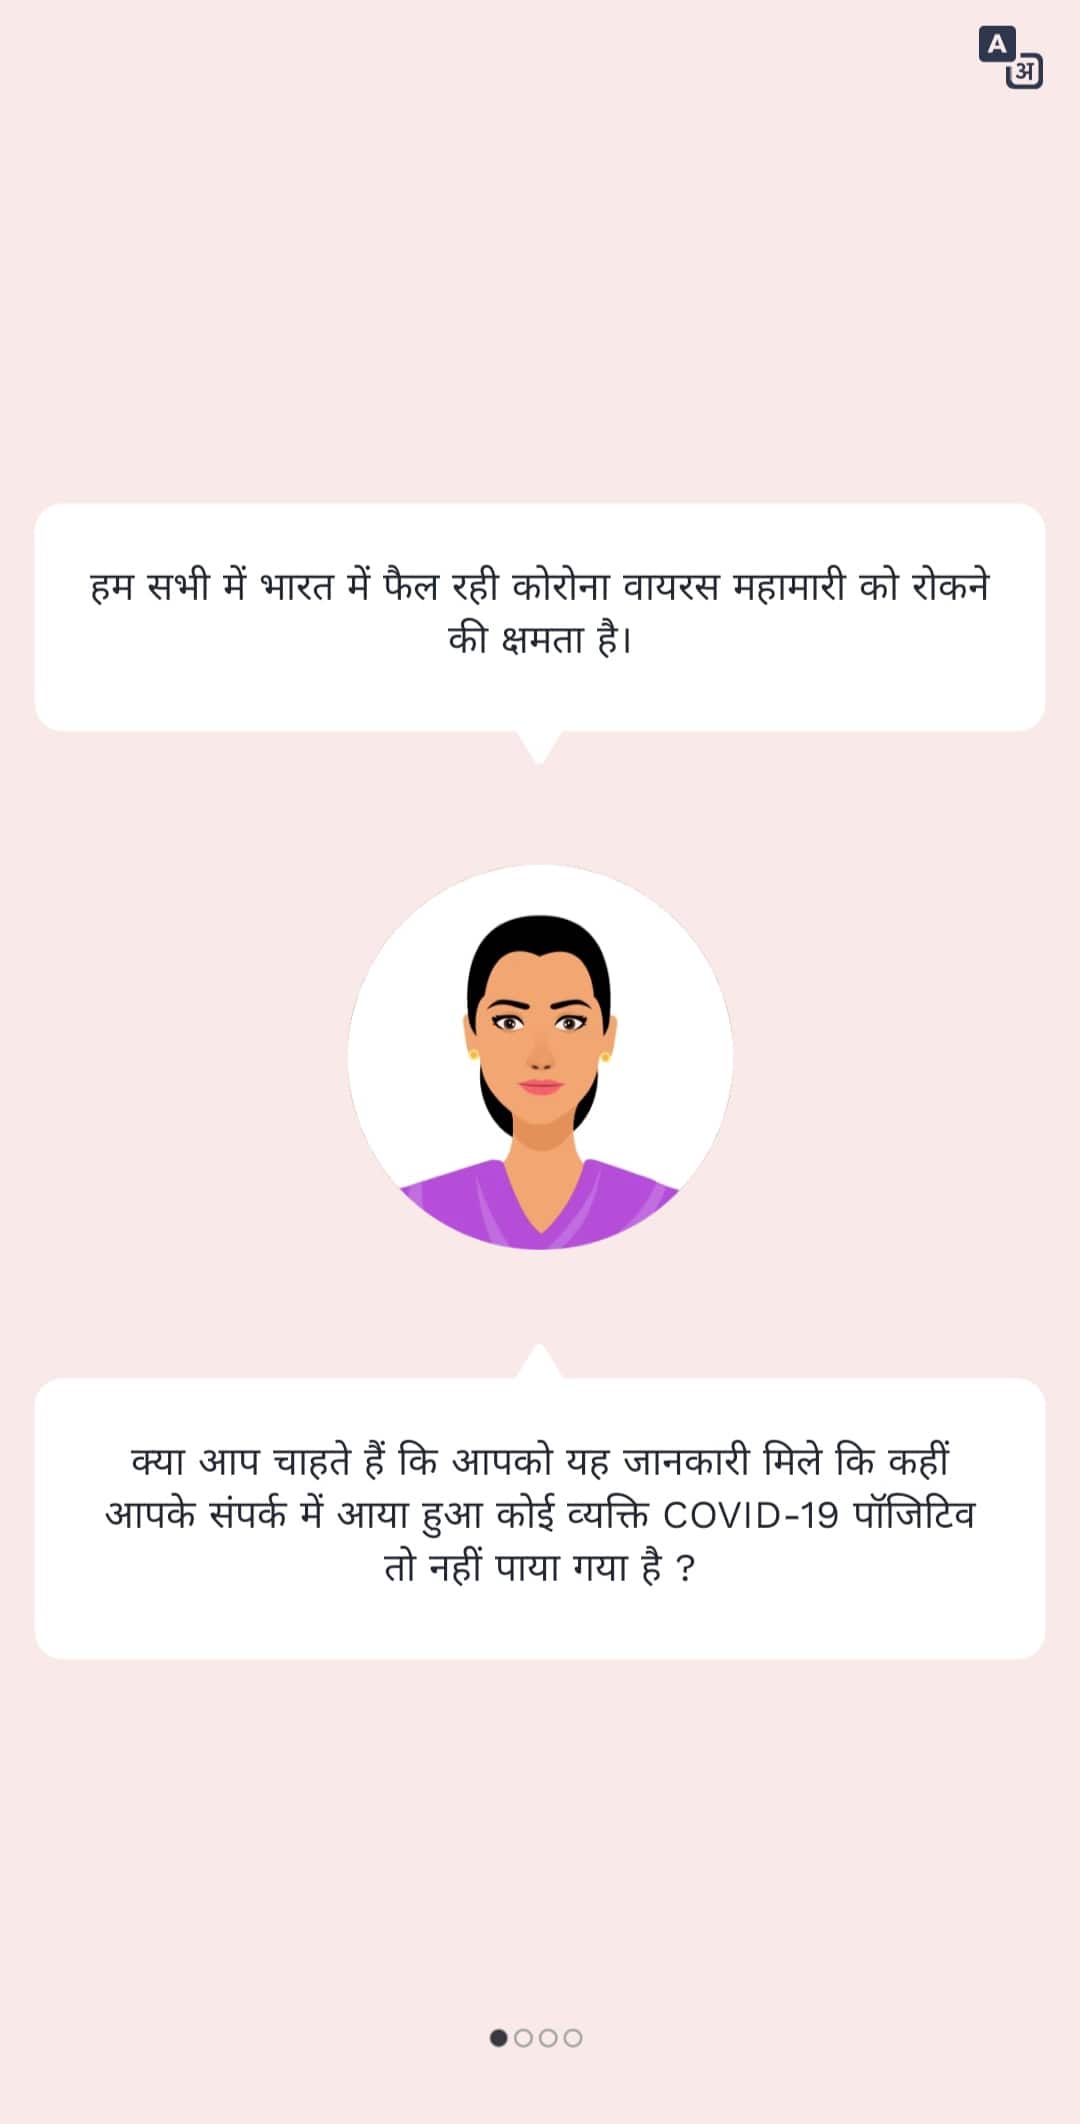 How to download and use Aarogya Setu app? Govt launches COVID-19 tracking app 'Aarogya Setu' for Android, iOS users